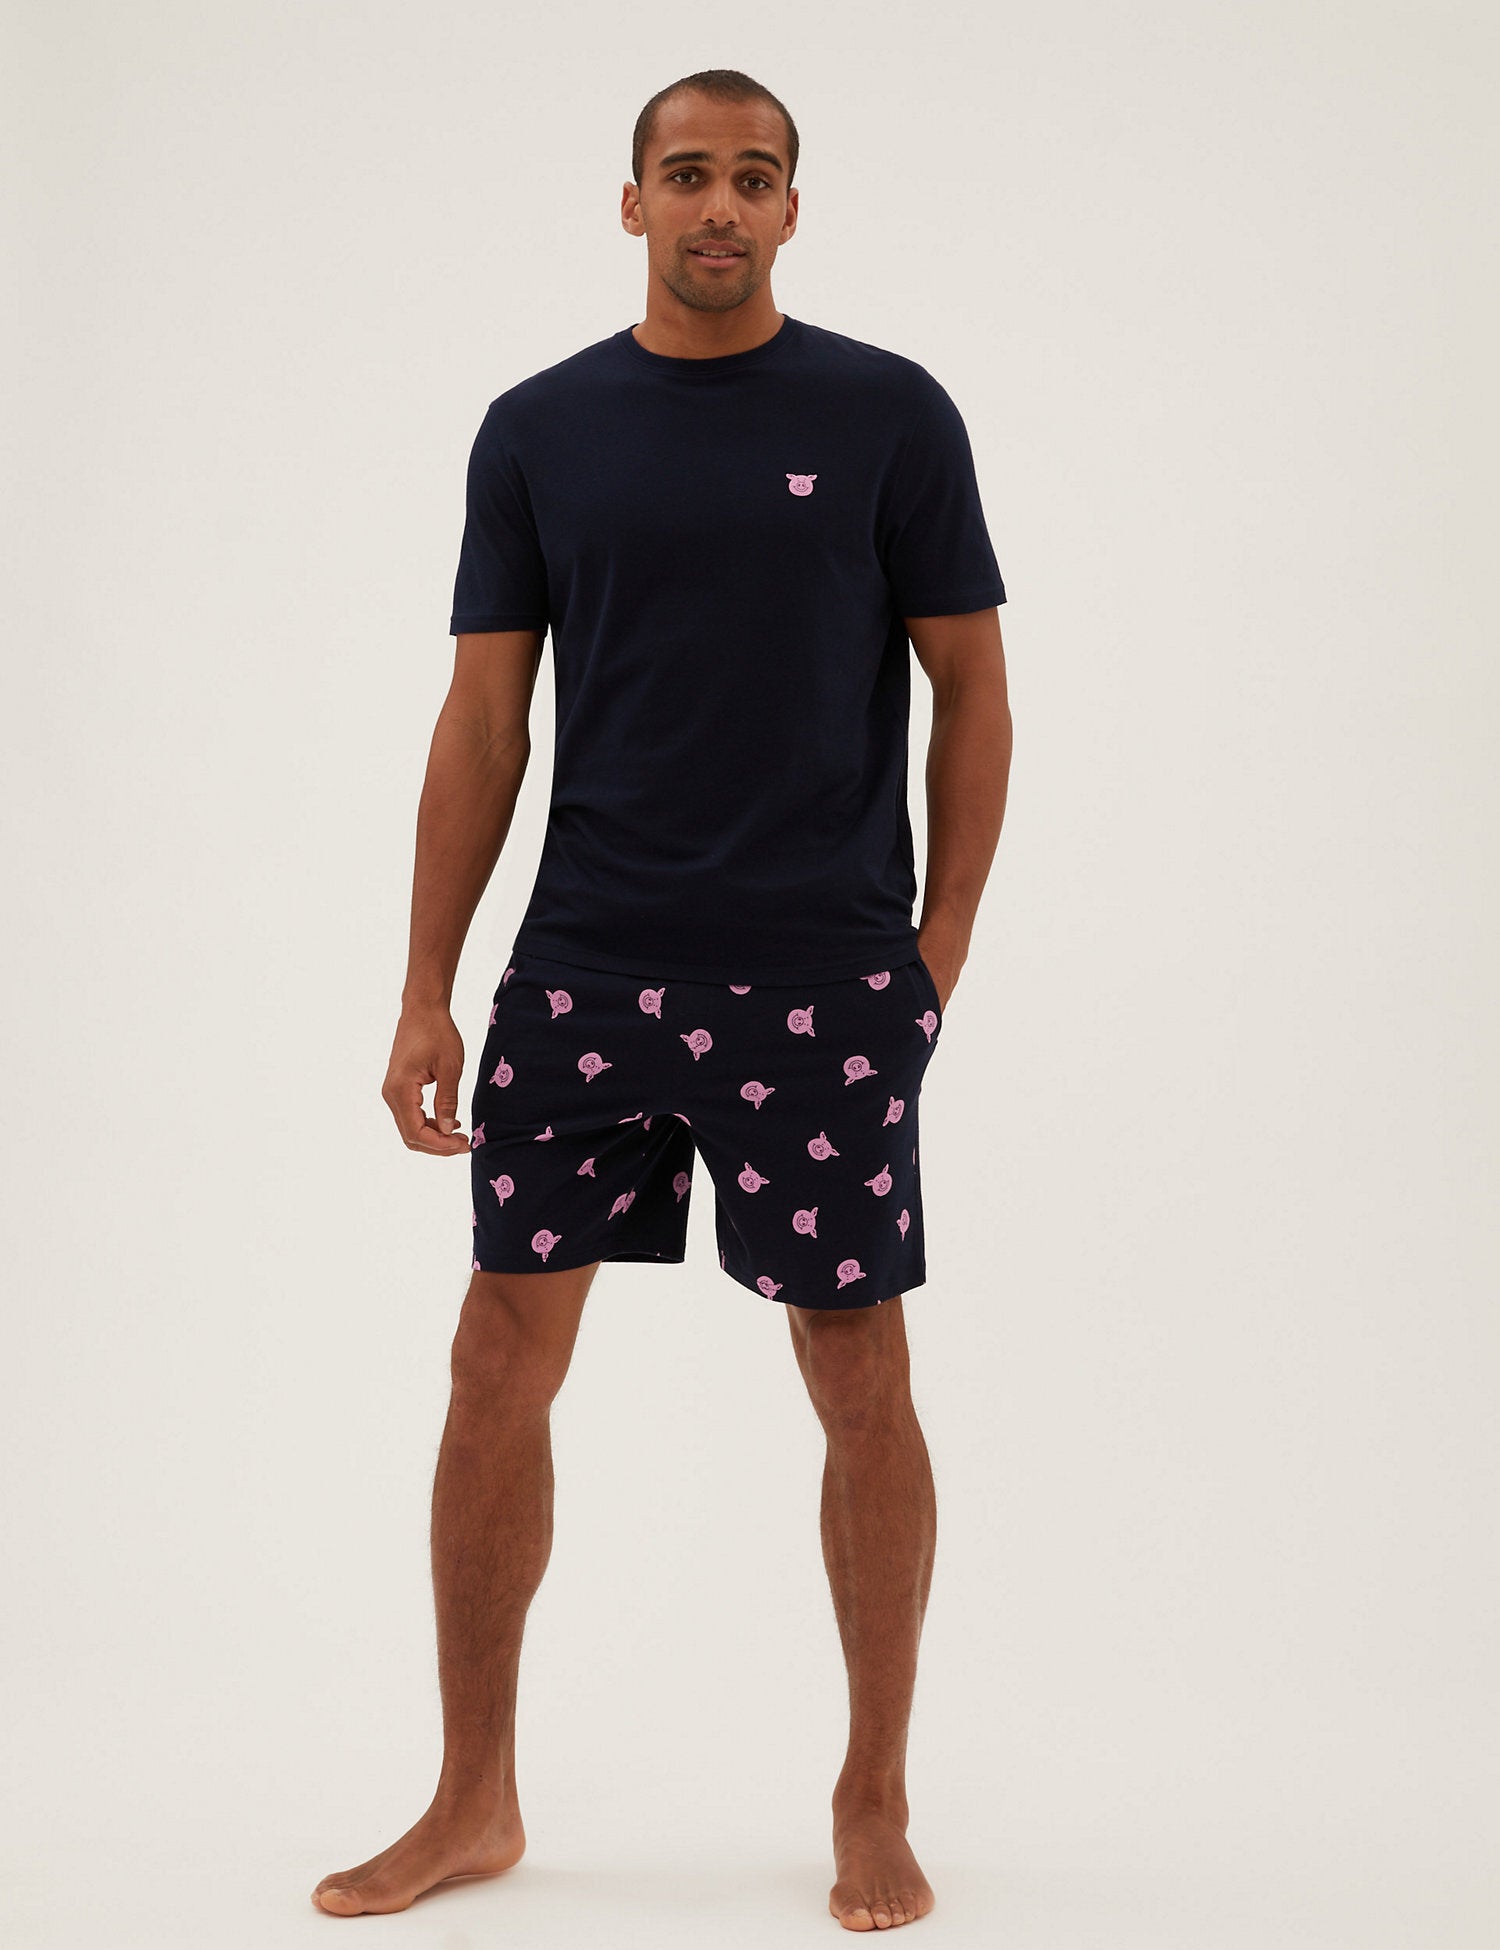 Pure Cotton Percy Pig™ Pyjama Set